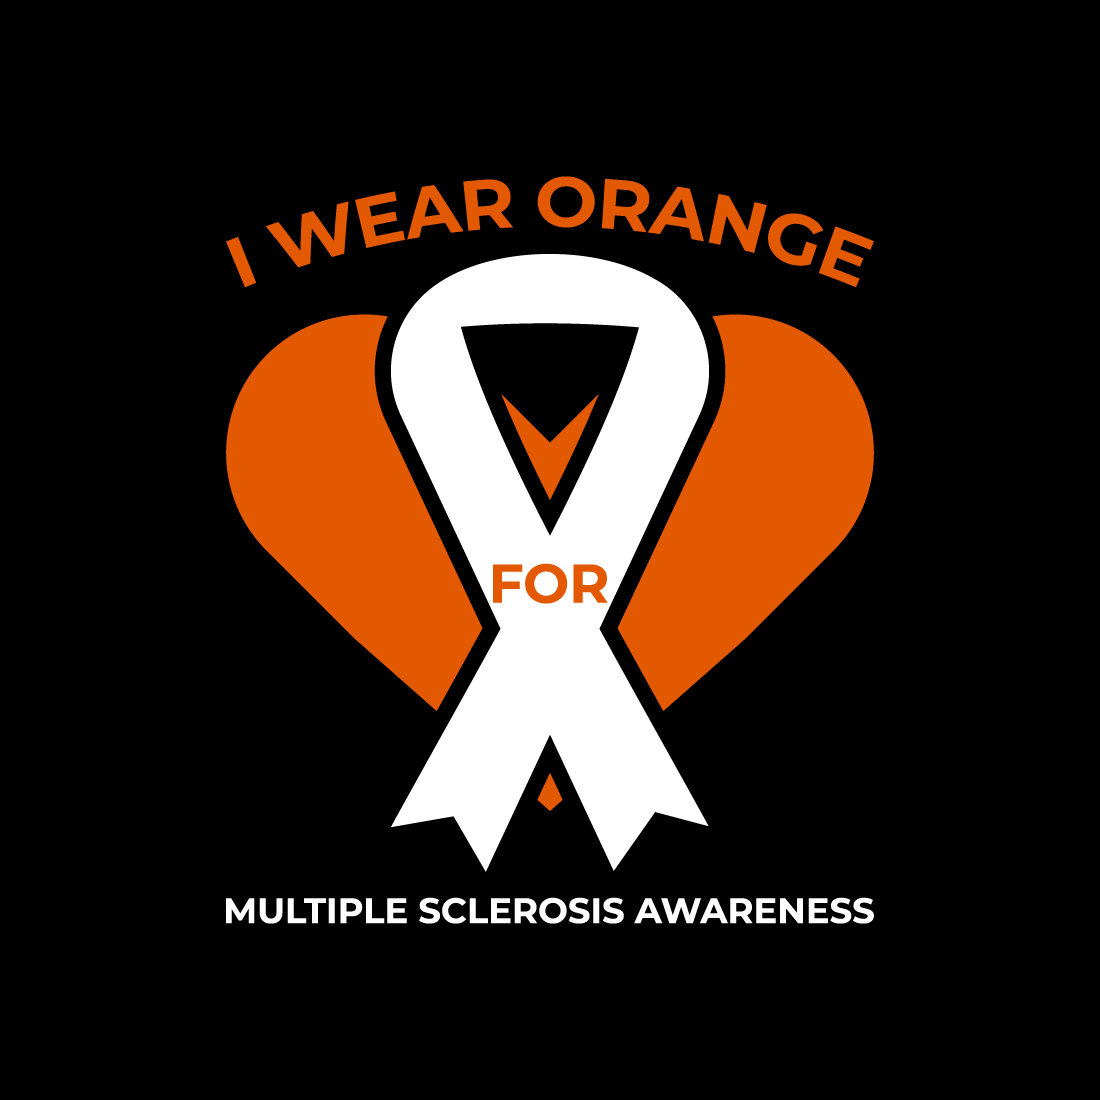 I wear orange for multiple sclerosis awareness.